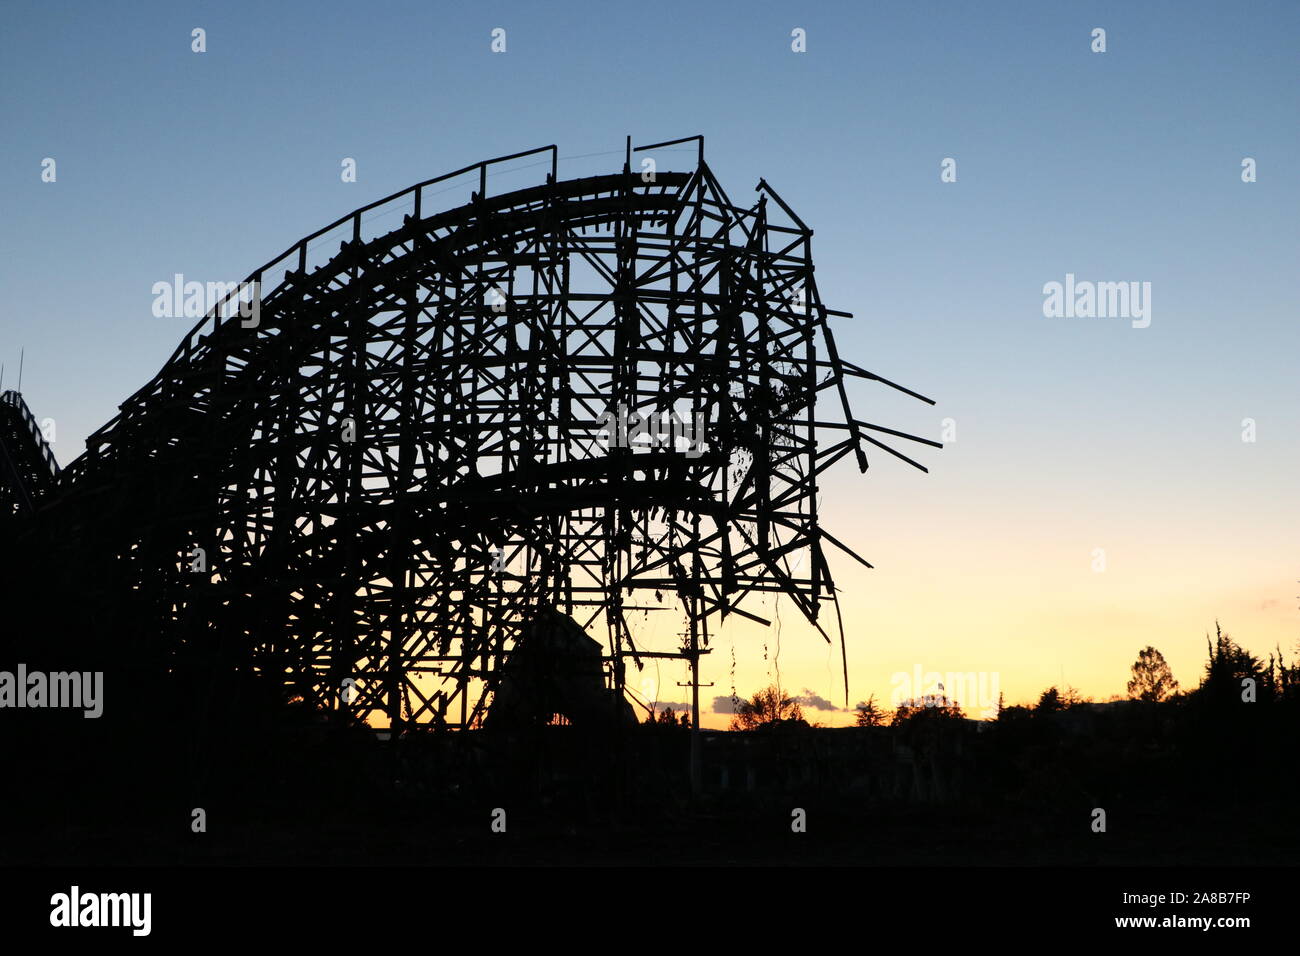 Abandoned Roller coaster Stock Photo